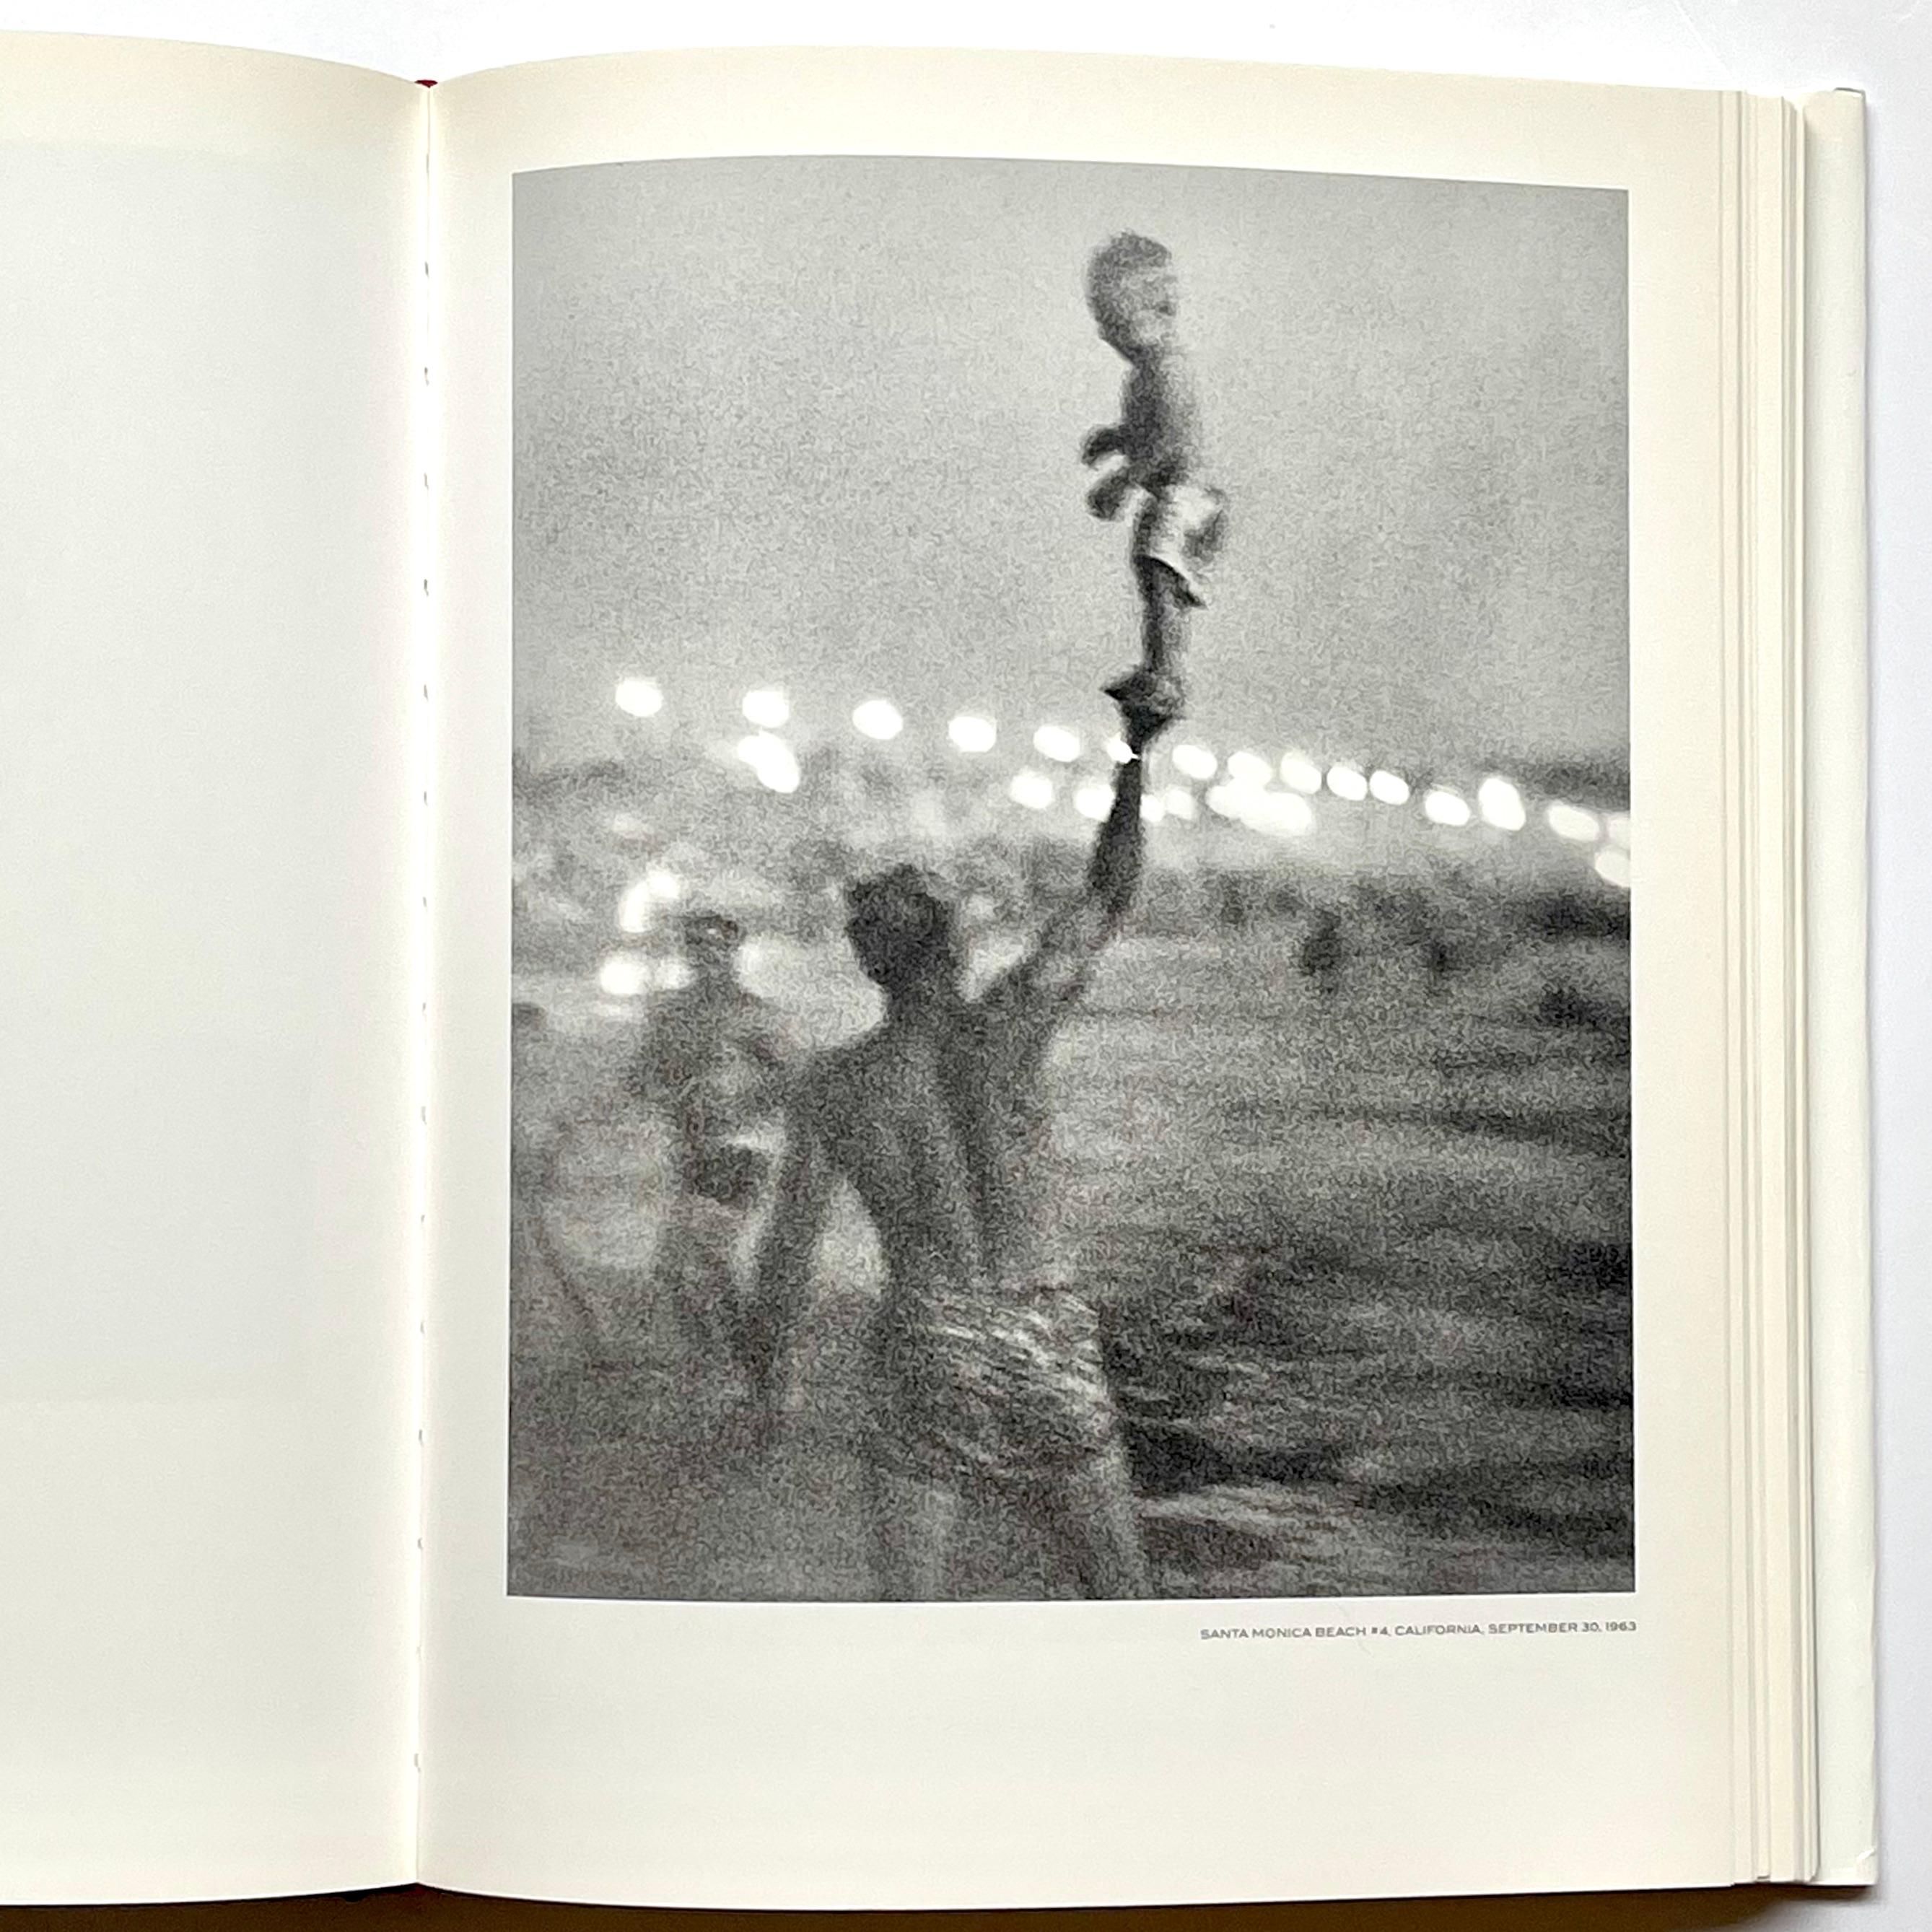 Danish Richard Avedon, Photographs: 1946-2004, 1st Edition, Hatje Kantz, 2007